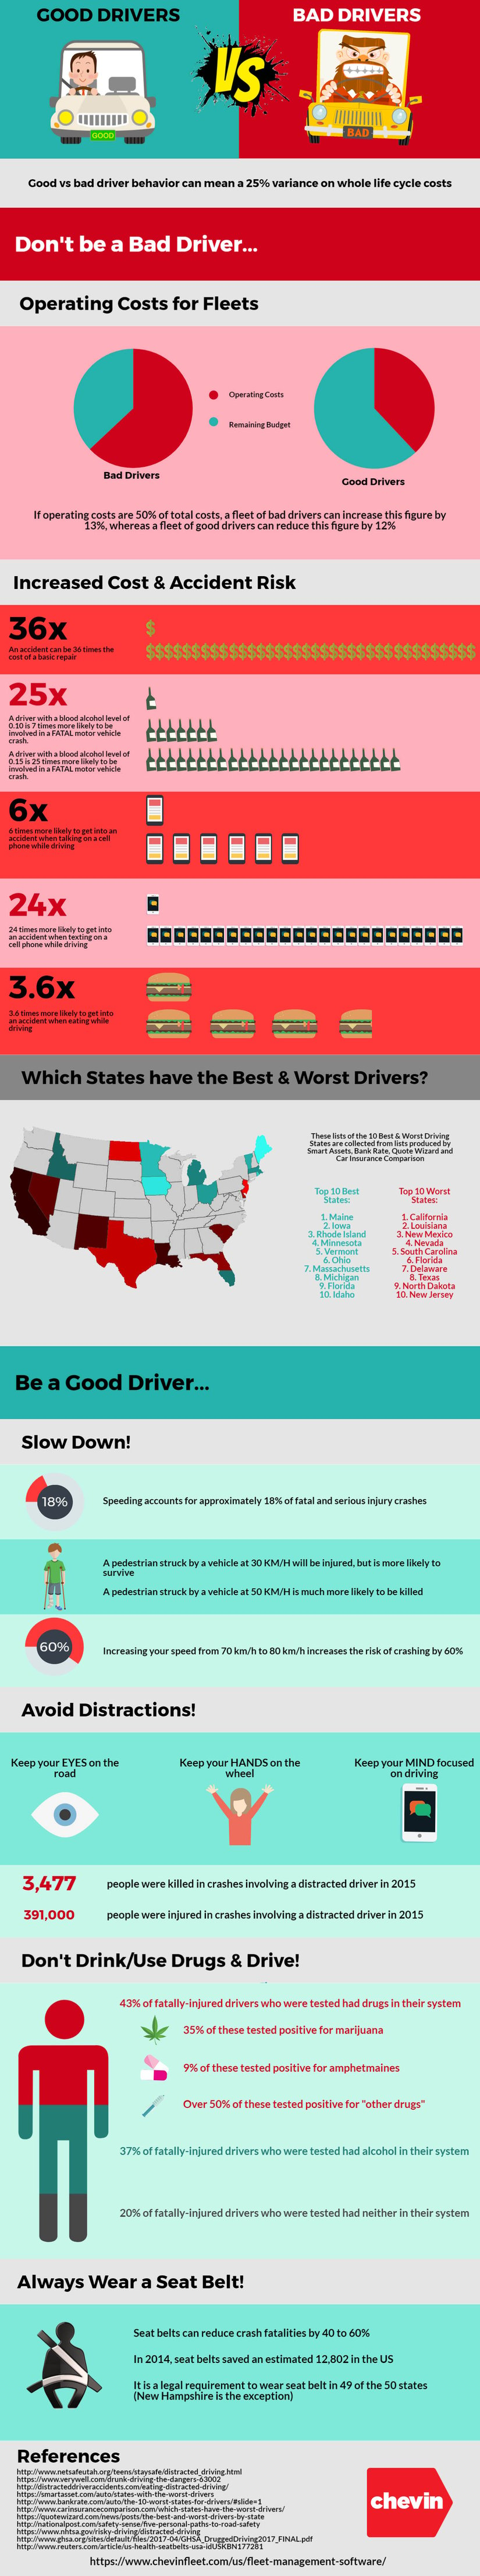 good_driver_vs_bad_driver_infographic.jpg